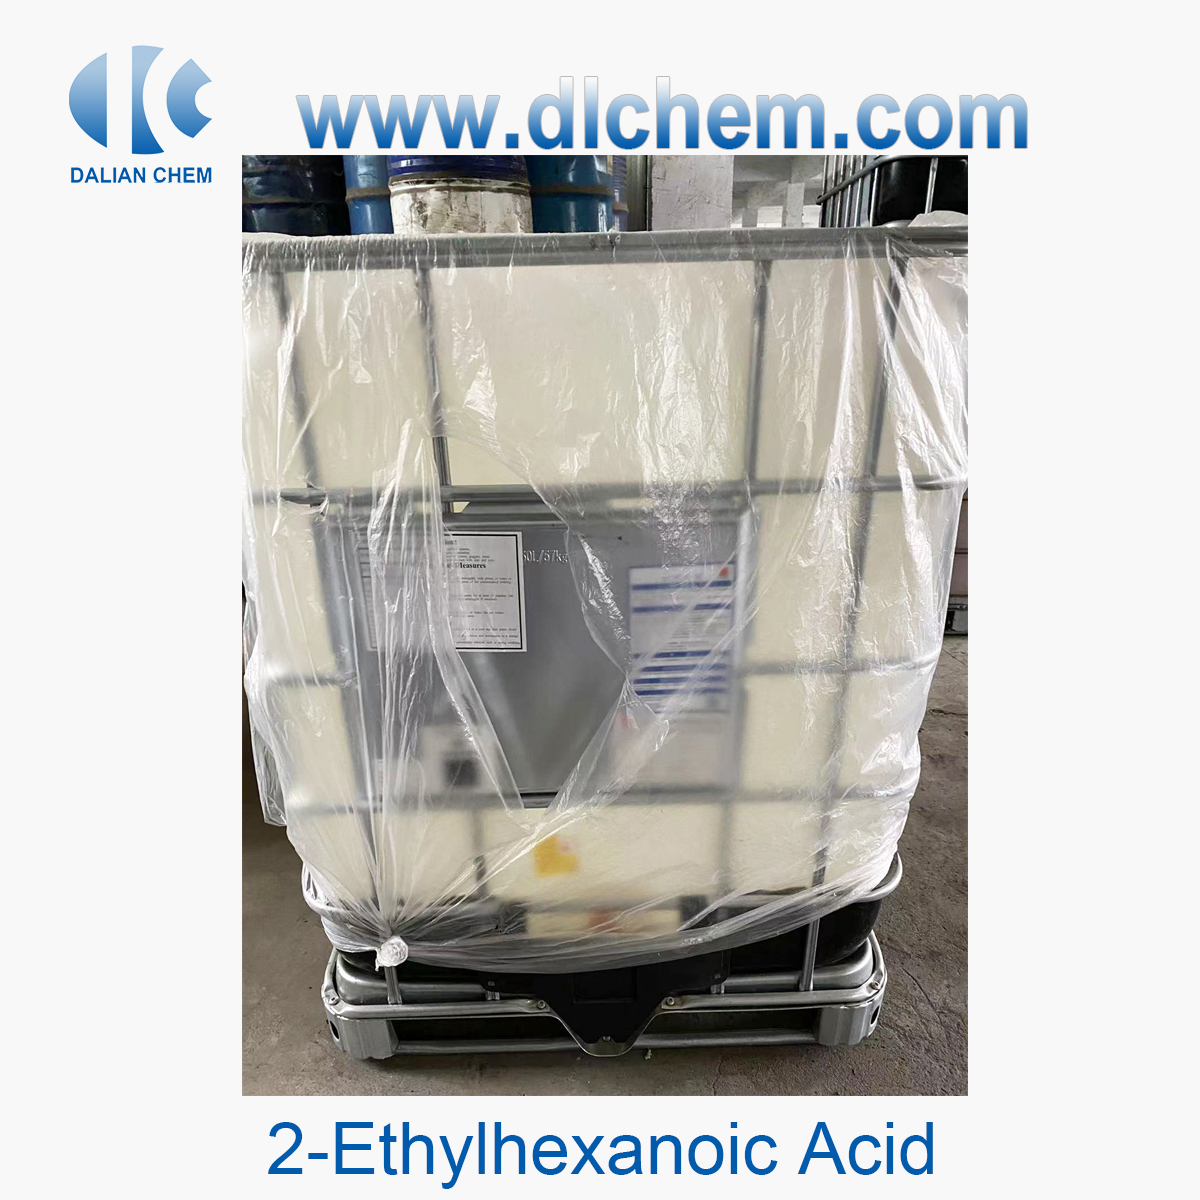 2-Ethylhexanoic Acid (2-EHA) CAS NO.149-57-5